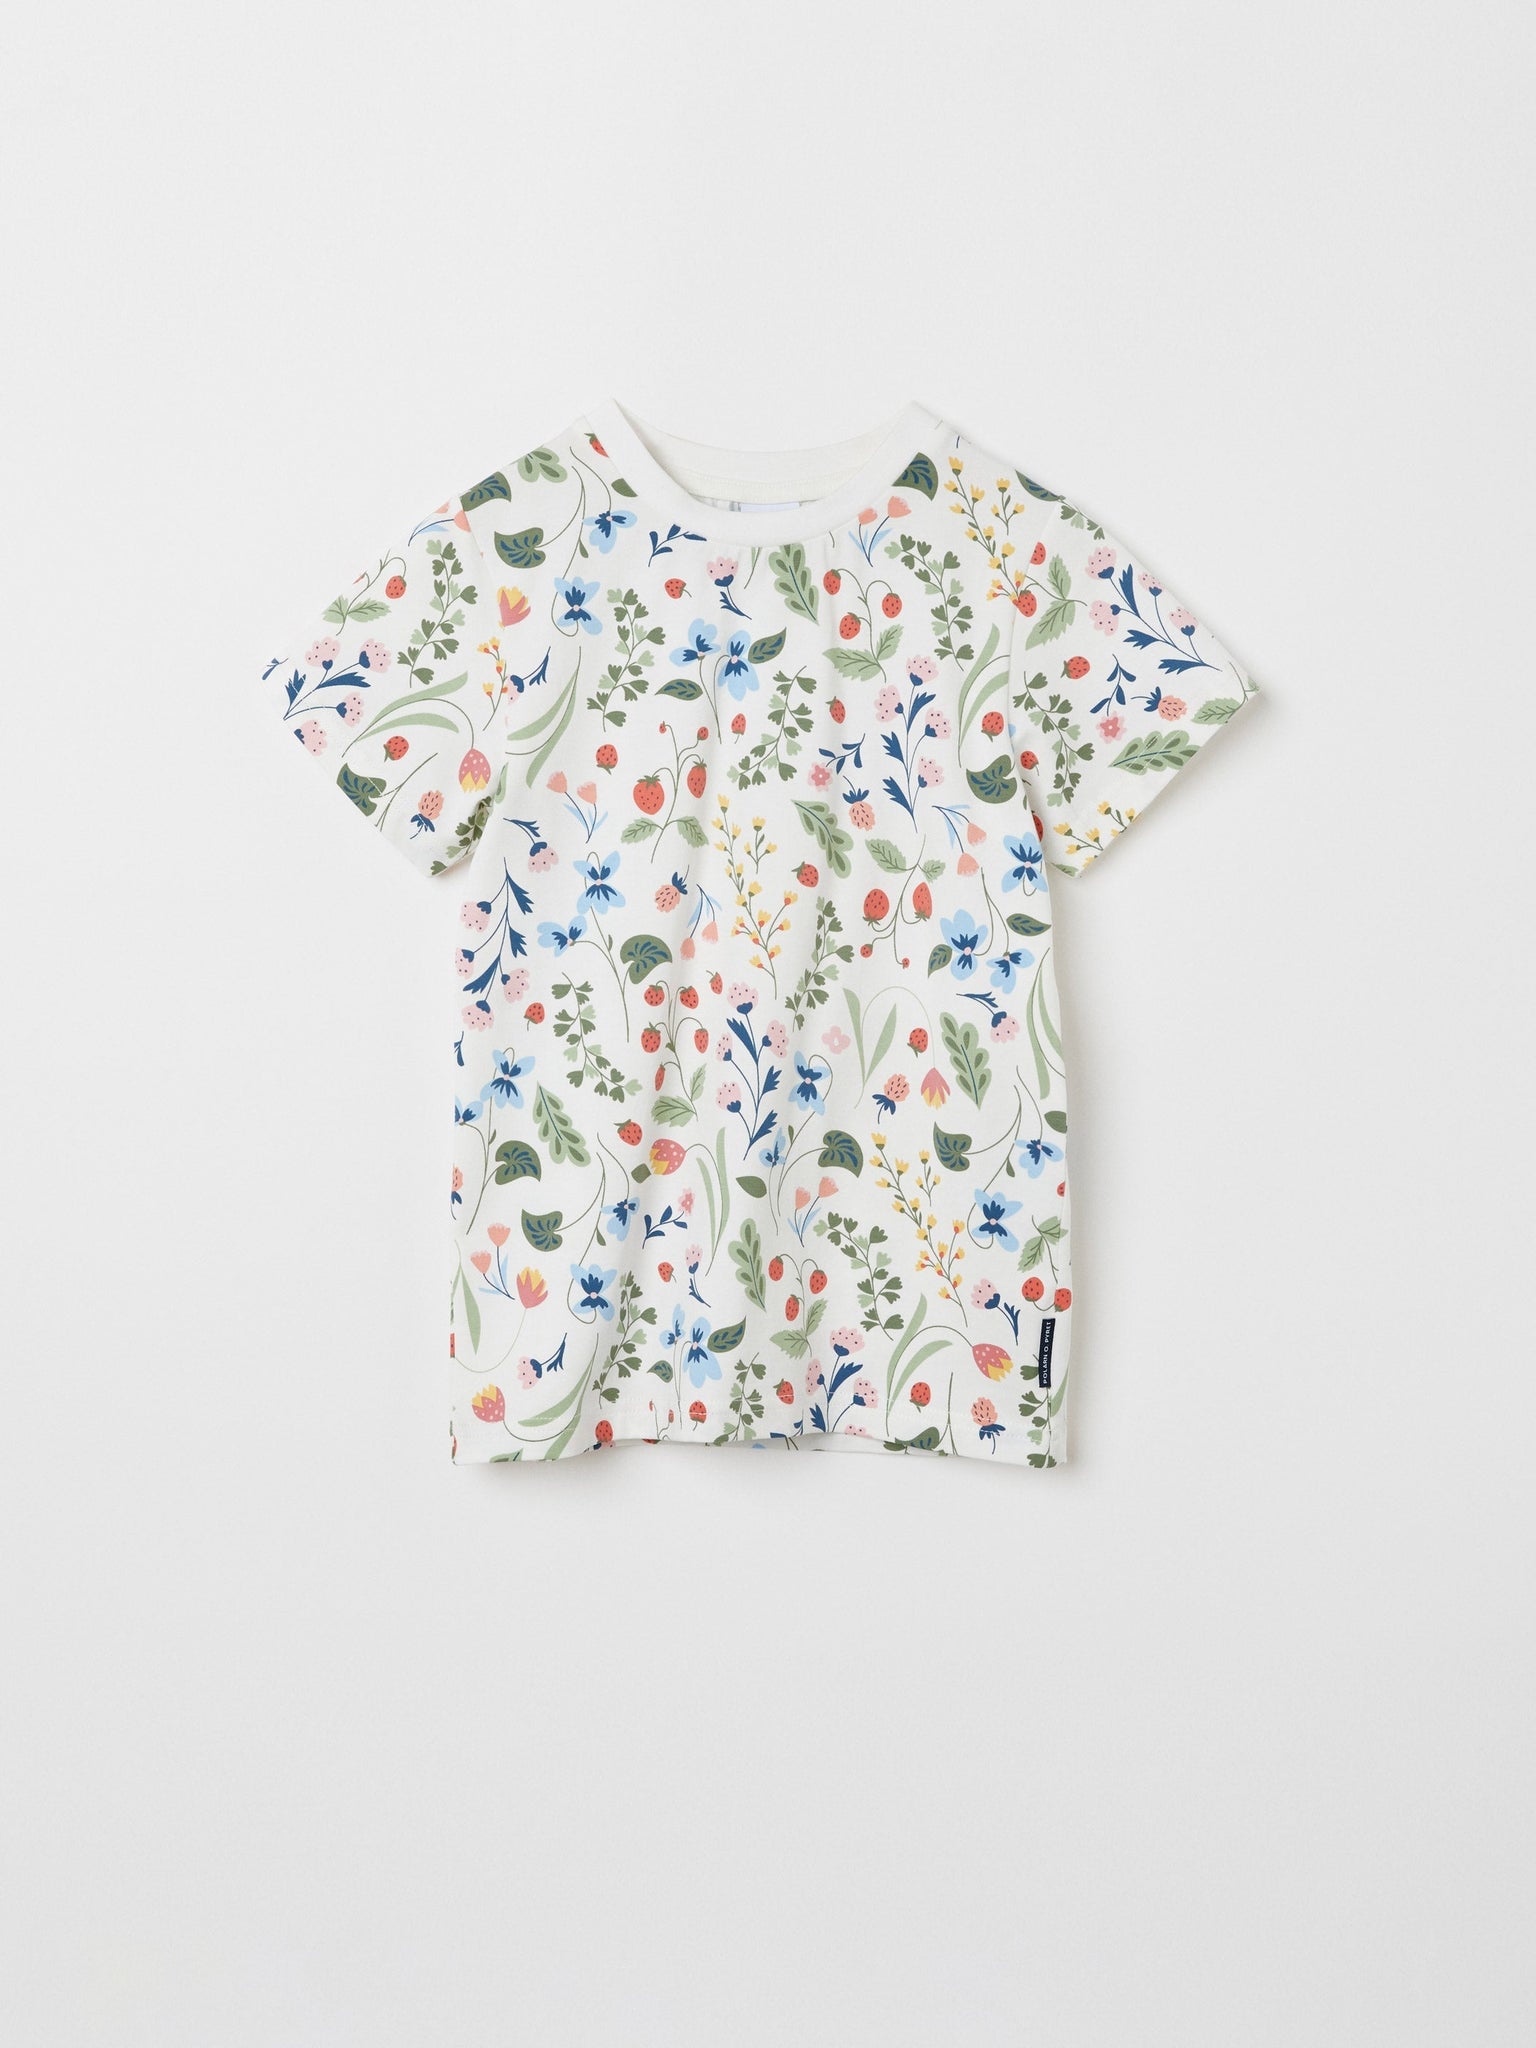 Strawberry Print T-Shirt